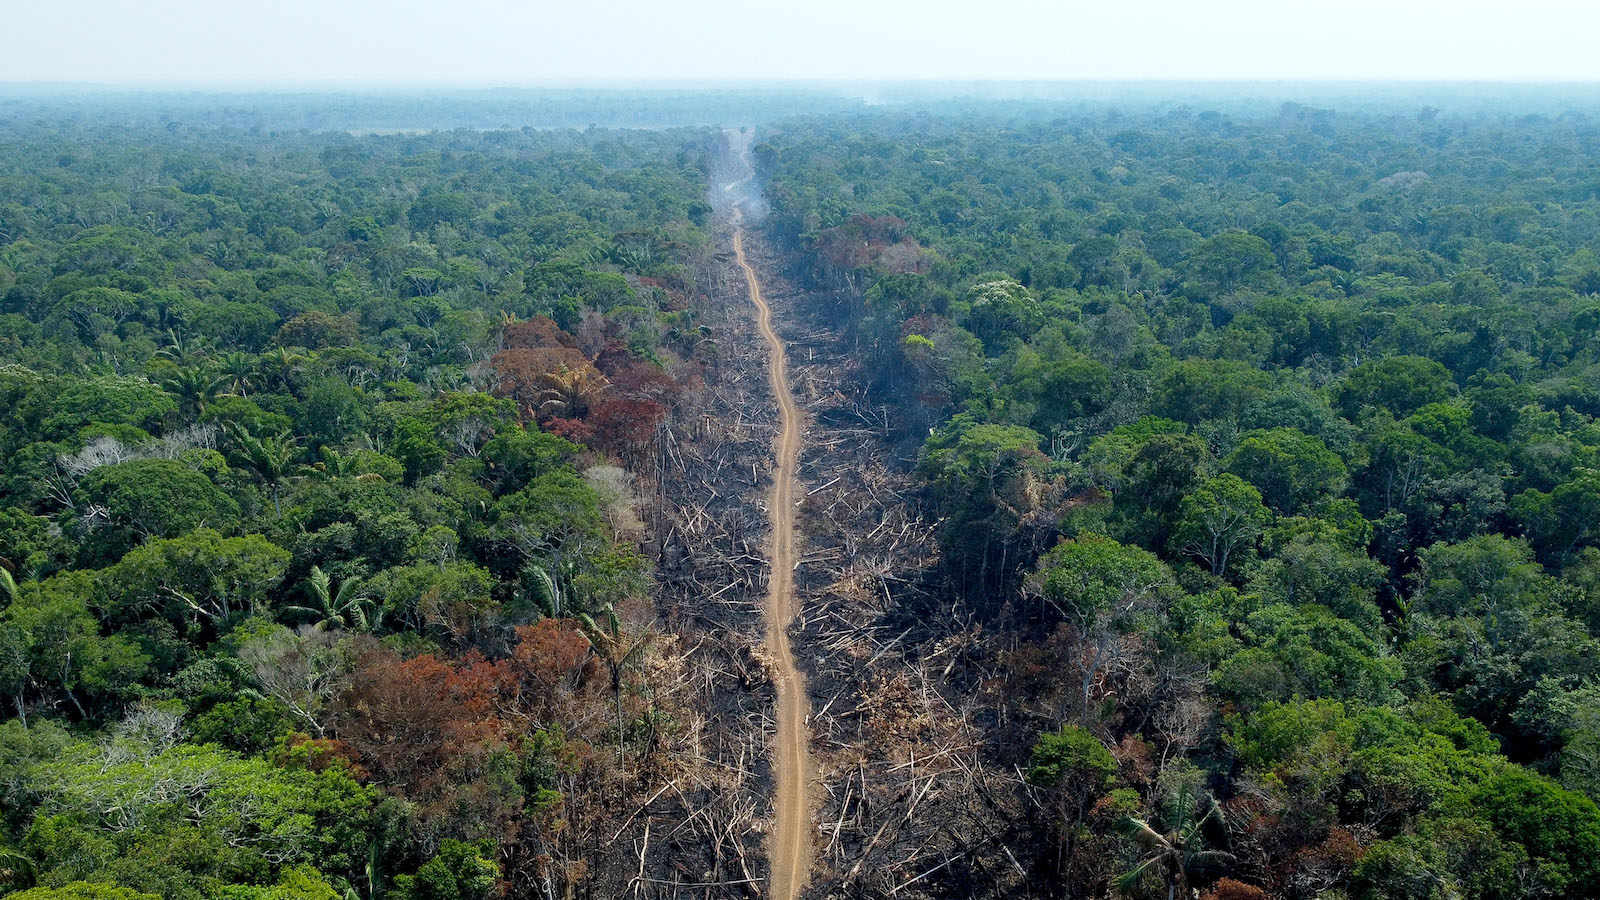 A road cuts through the Amazon rainforest